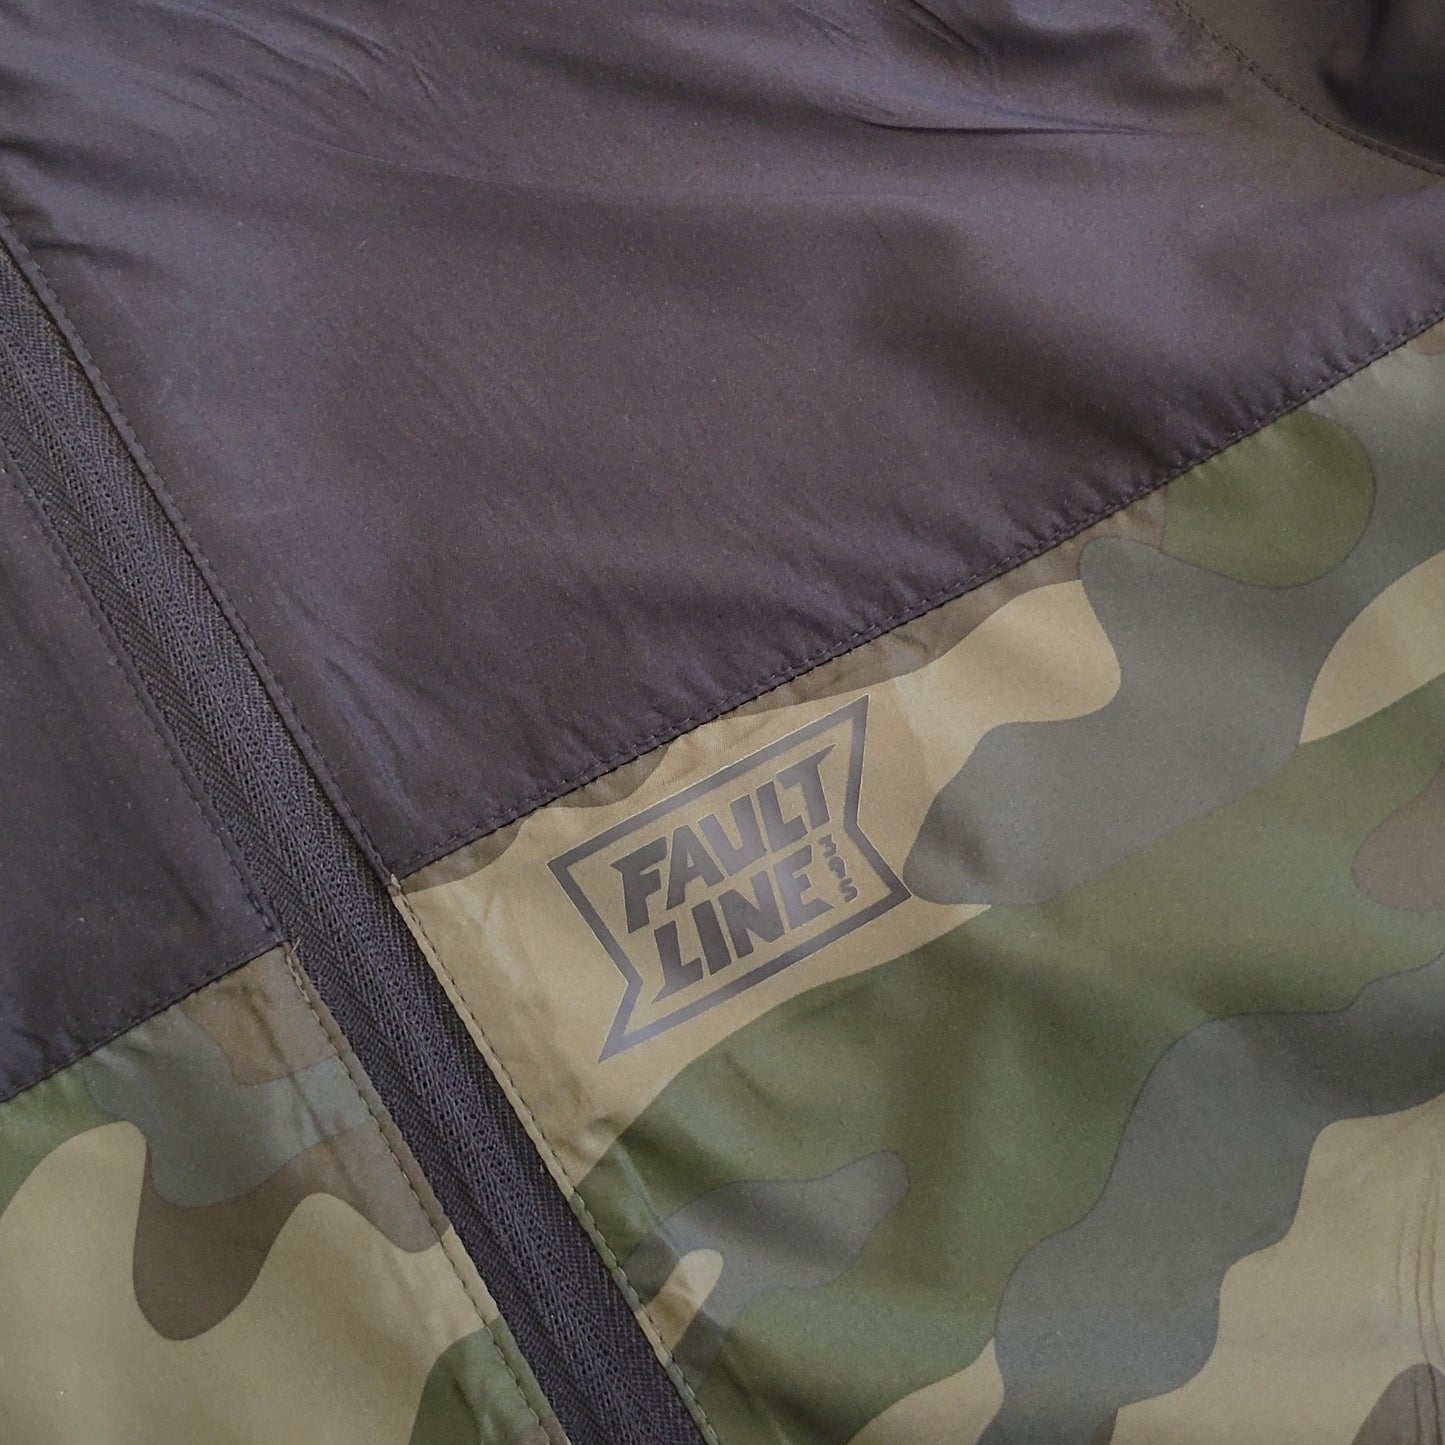 Pack Lite Jacket - Army Camo